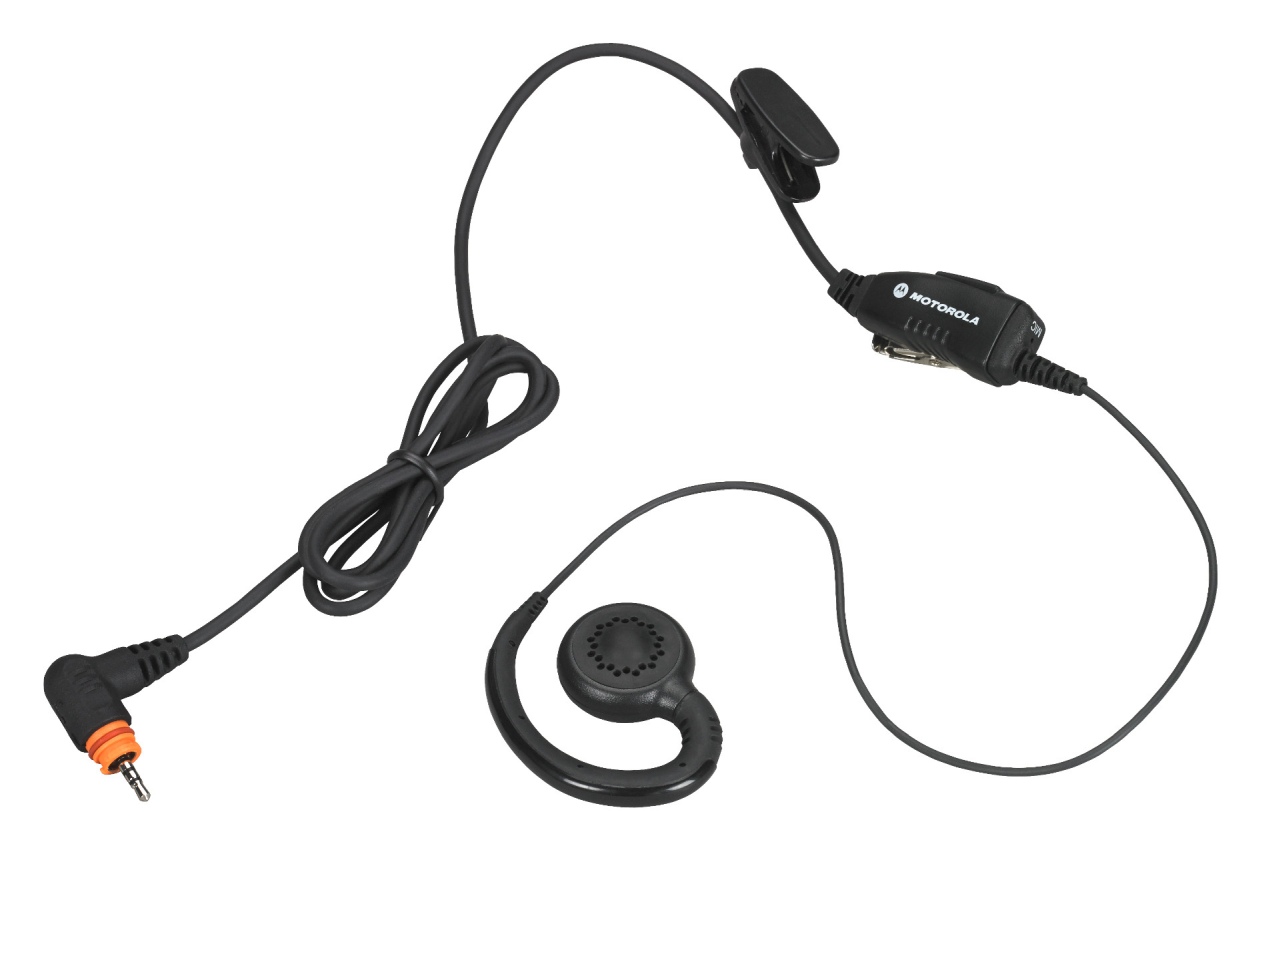 Motorola Drehbarer Ohrhörer mit innenliegendem Mikrofon und kombi. PTT-Taste Push-to-Talk PMLN7189A